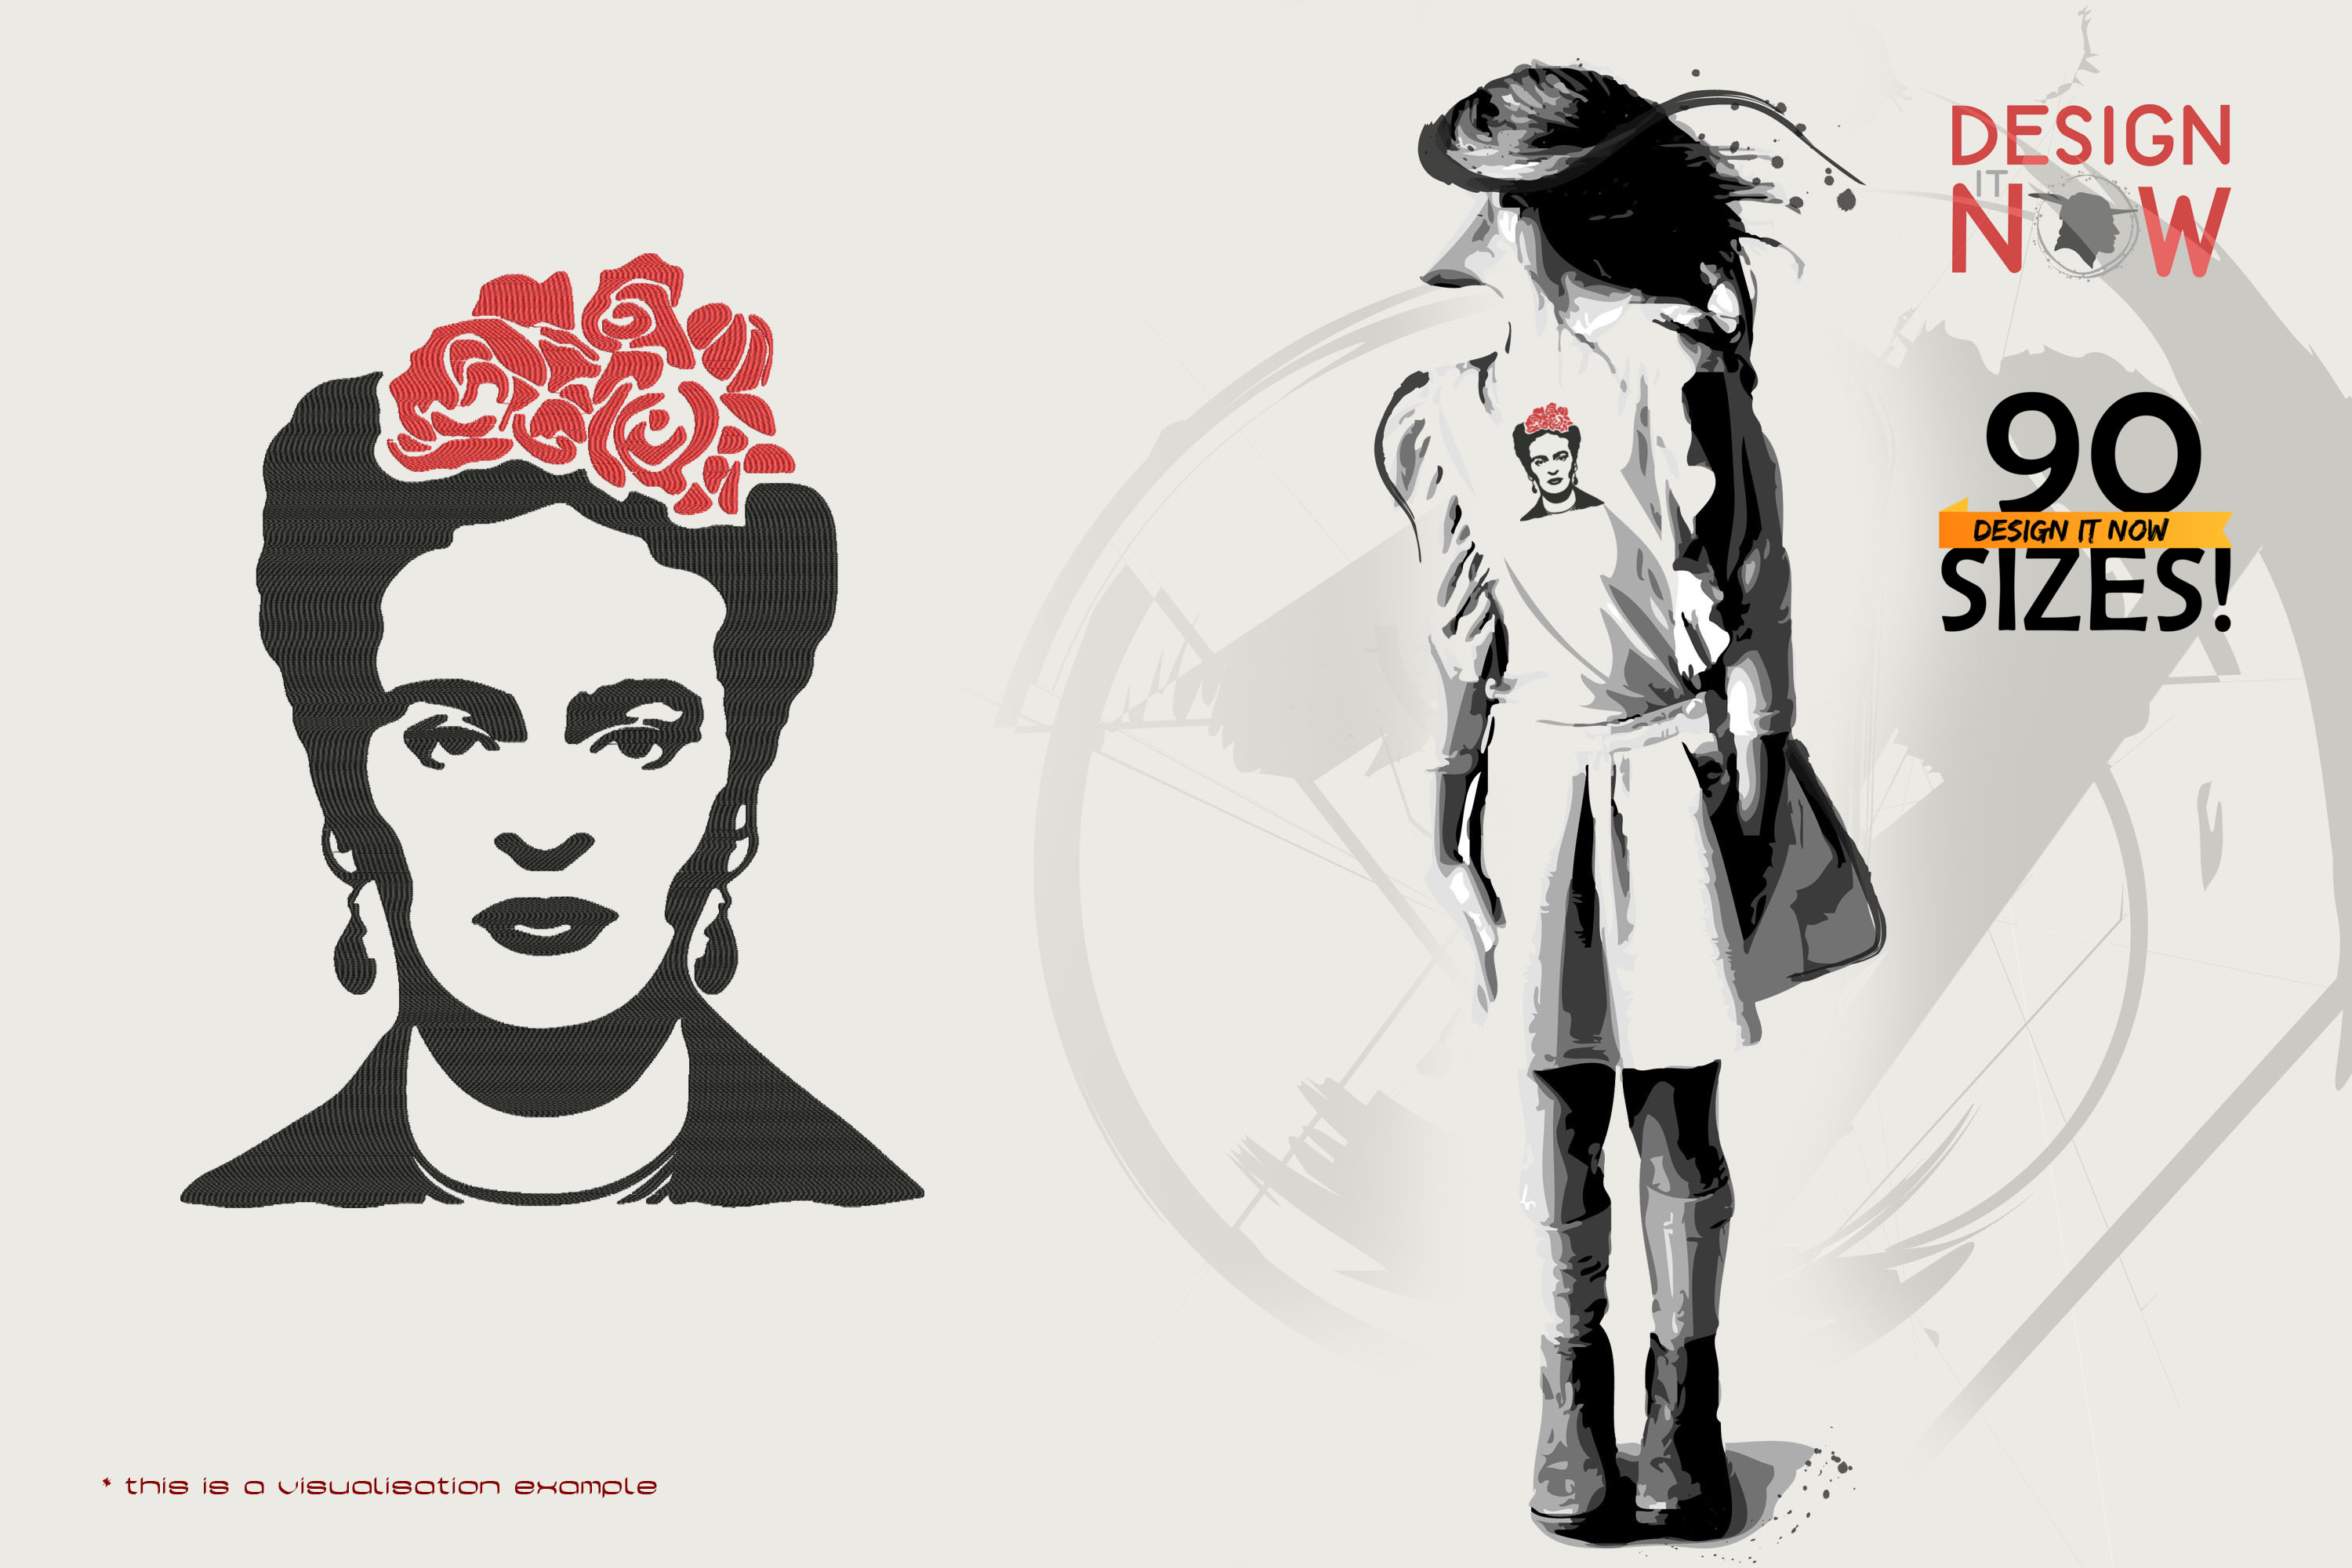 Tribute To Artist Magdalena Carmen Frieda Kahlo Y Calderon aka Frida Kahlo